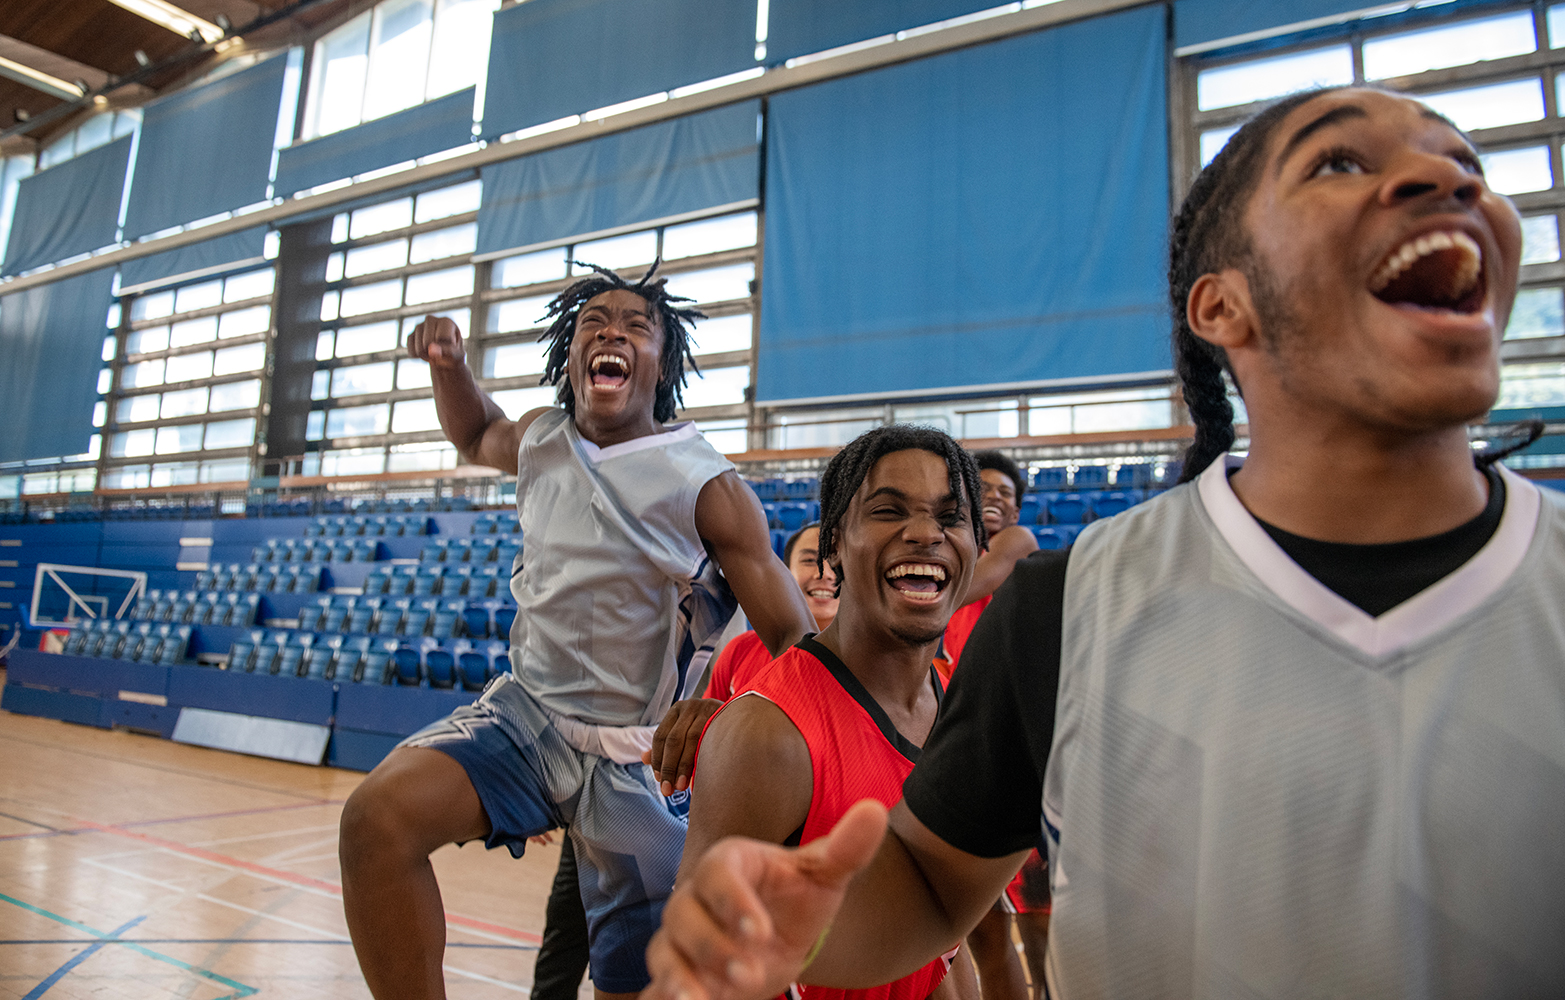 UK_Coaching_sports_documentary_basketball_hannahmauleffinch